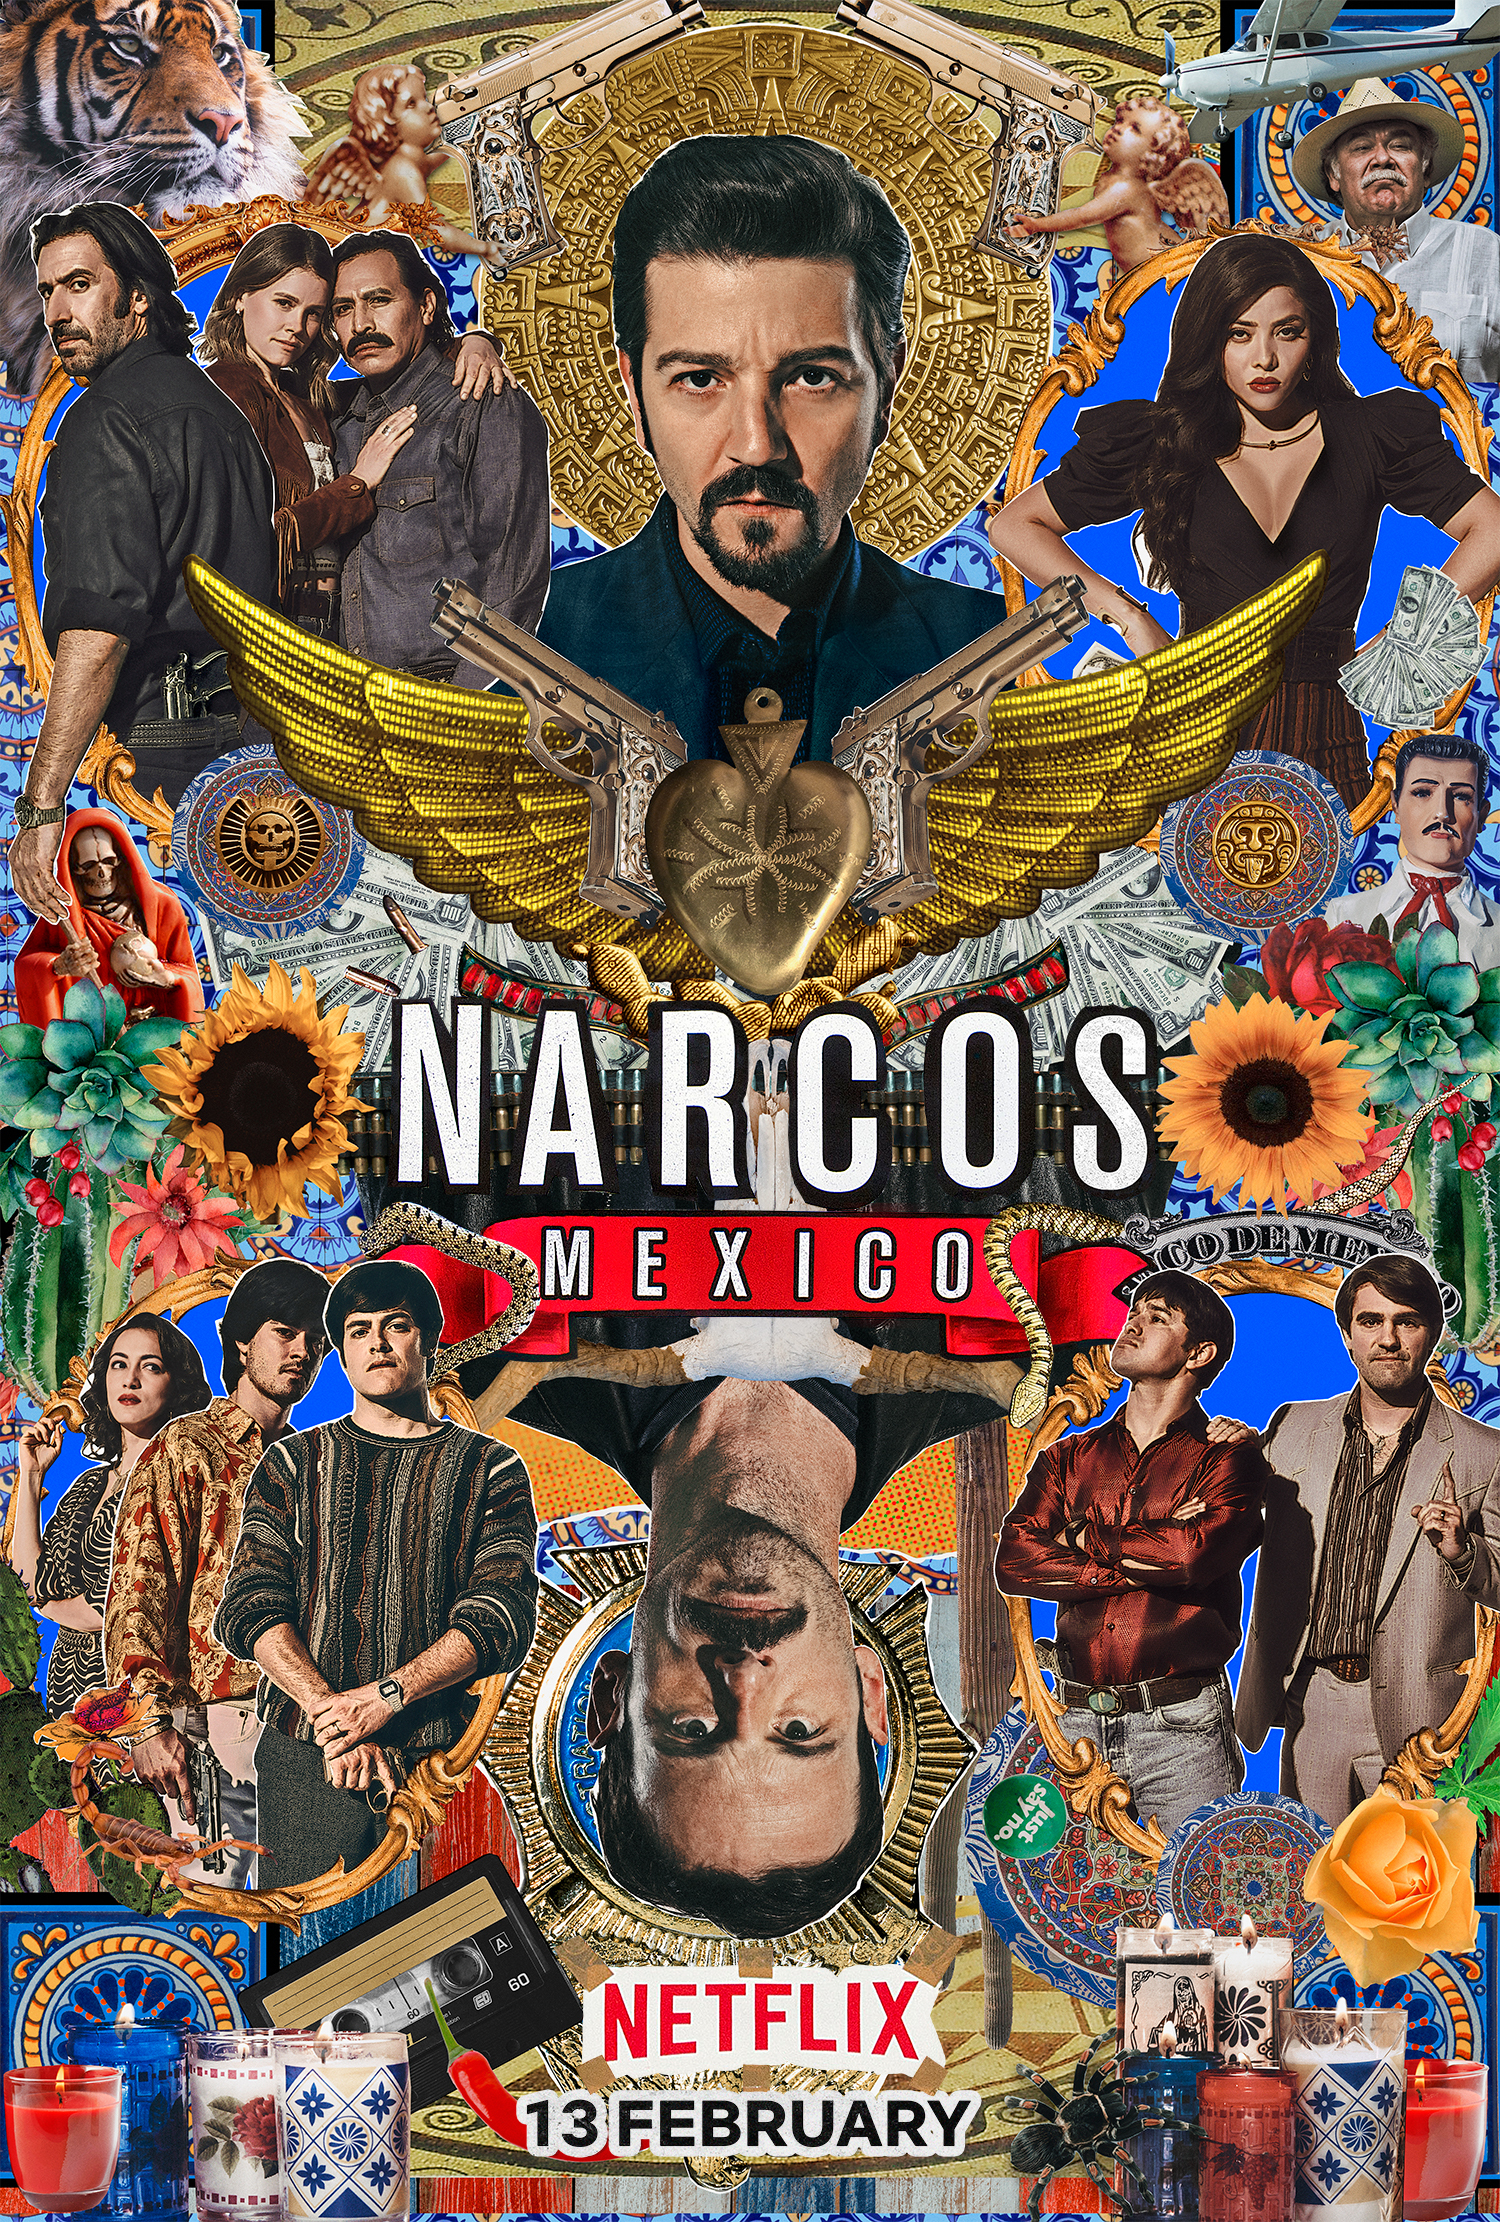 Stiahni si Seriál Narcos: Mexiko / Narcos: Mexico S01E08 (CZ)[WebRip][1080p] = CSFD 86%